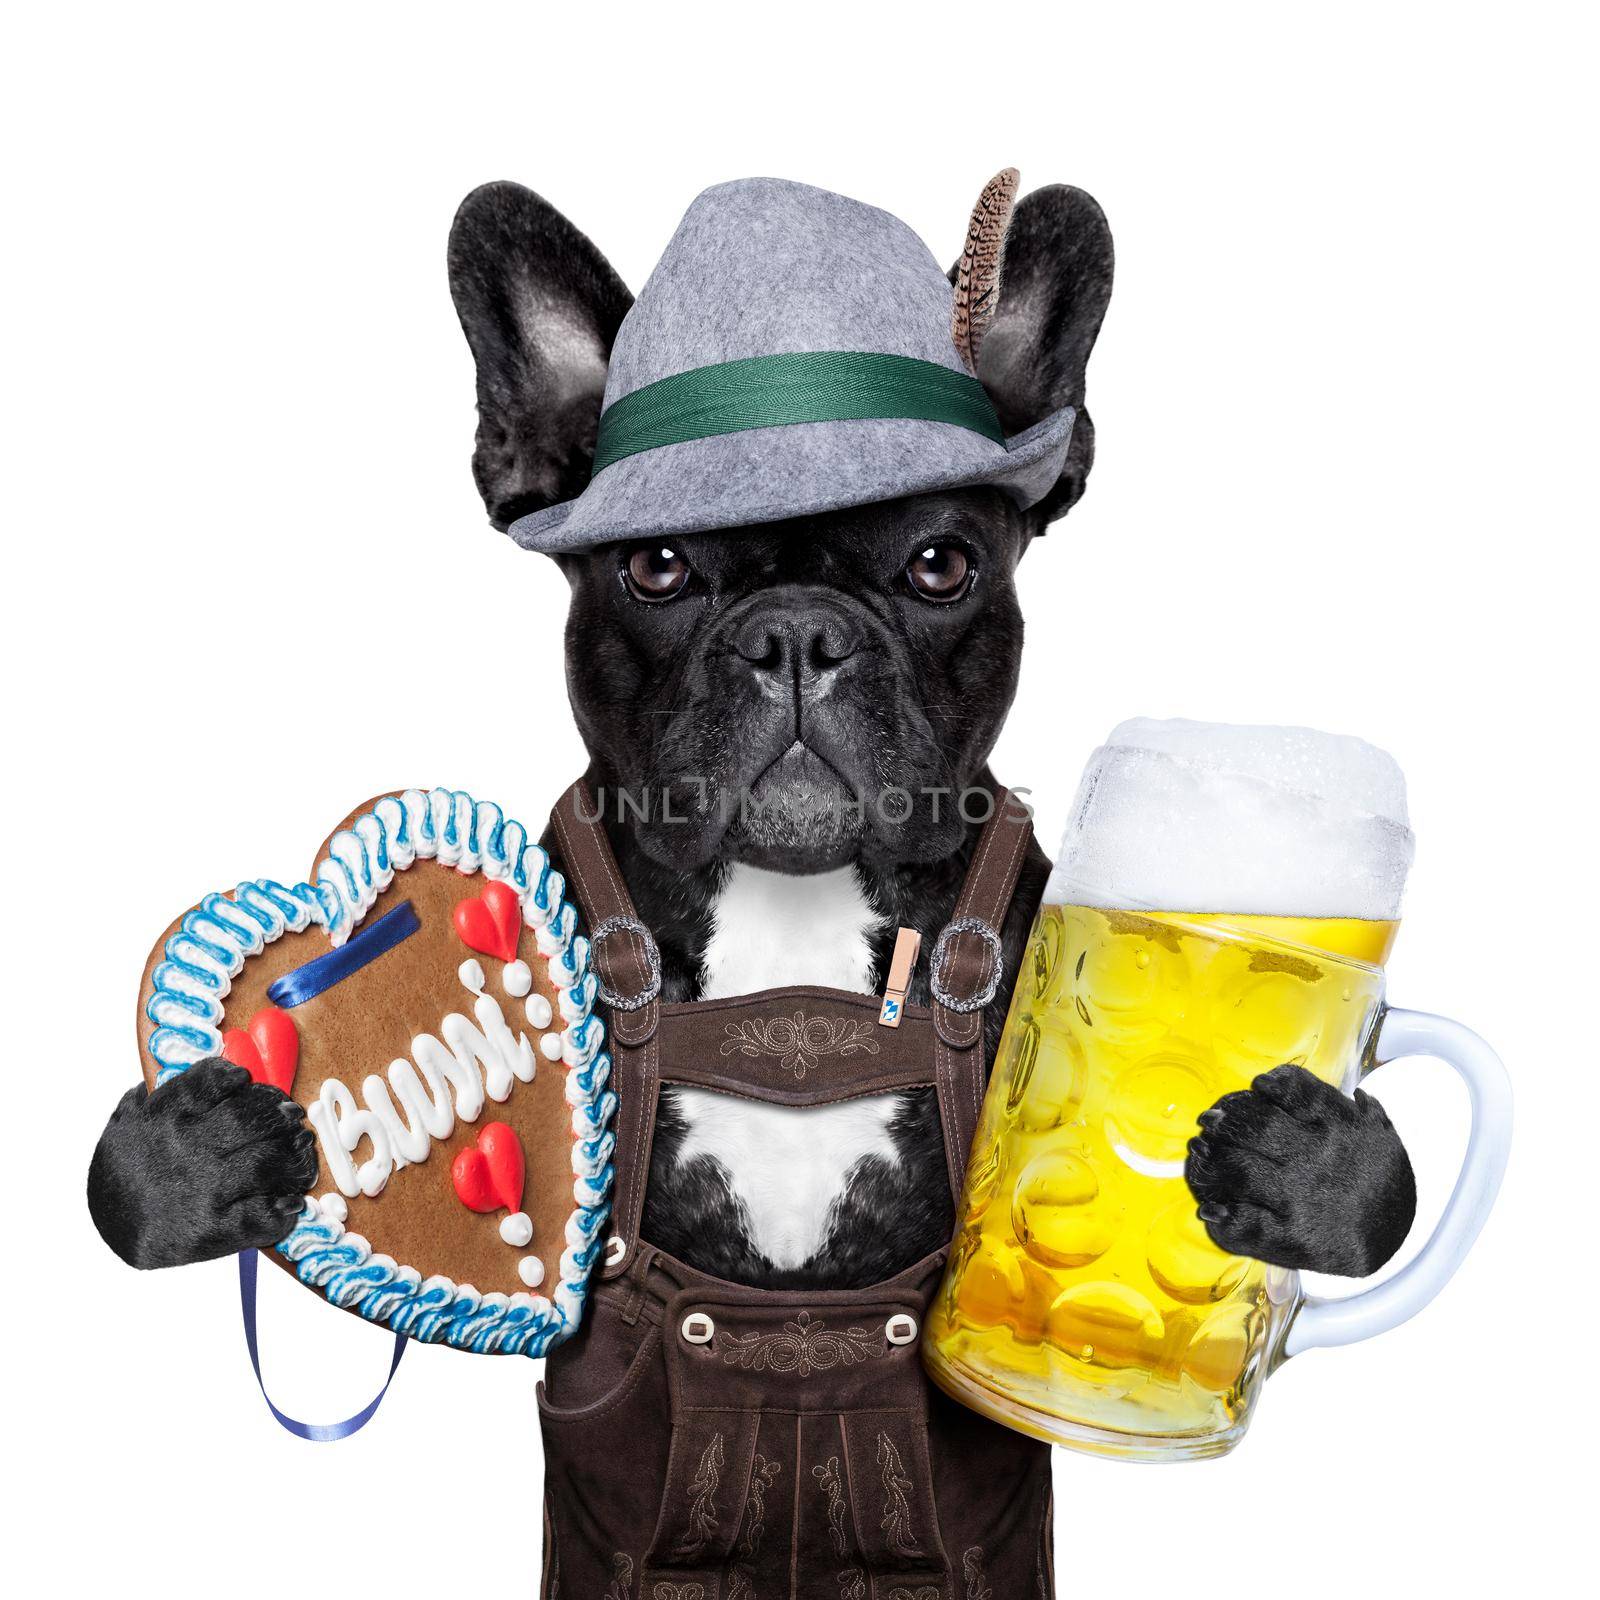 bavarian german  dog  with beer mug and gingerbread heart